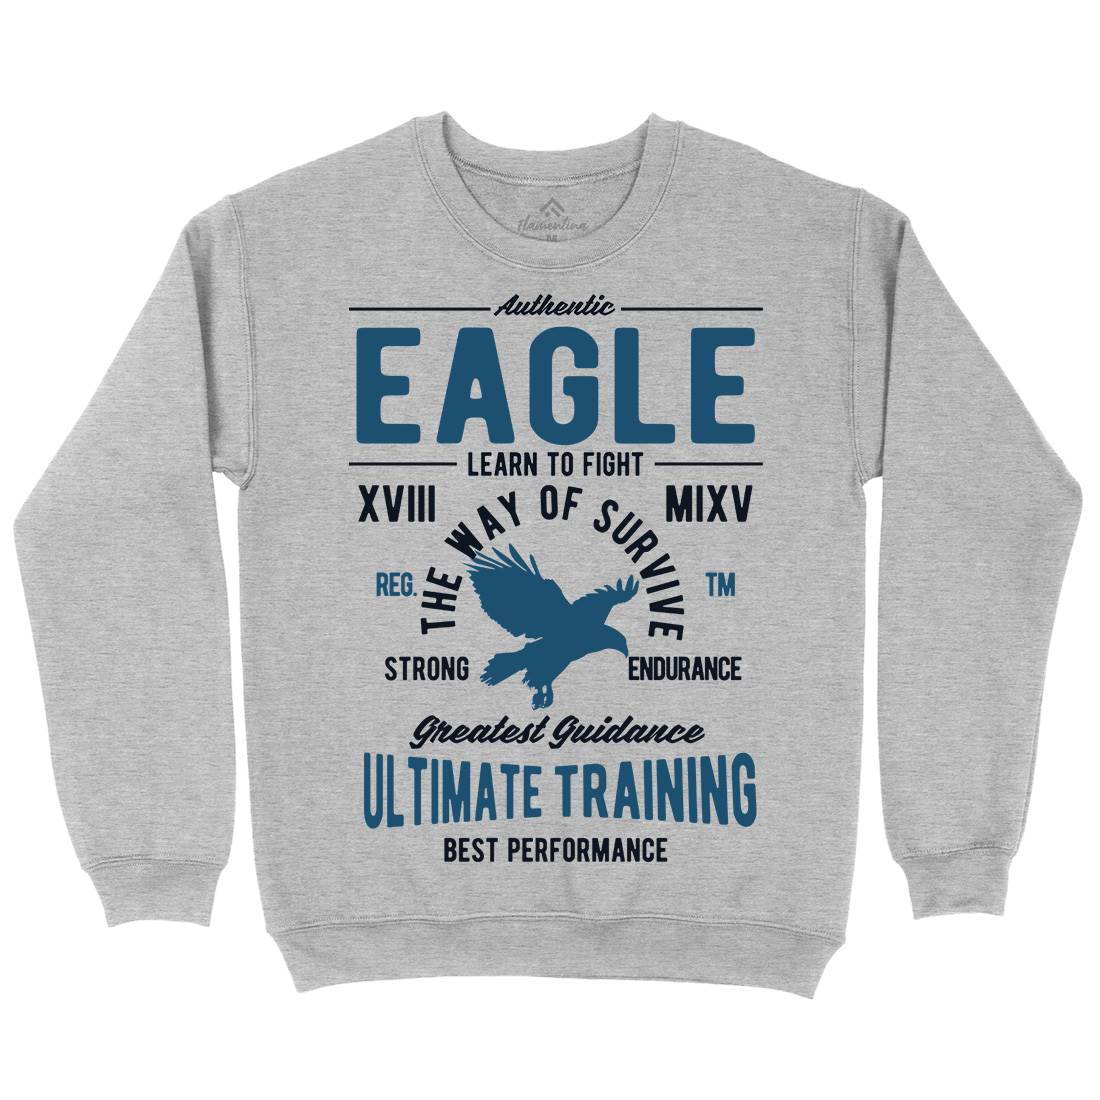 Authentic Eagle Mens Crew Neck Sweatshirt Animals B180